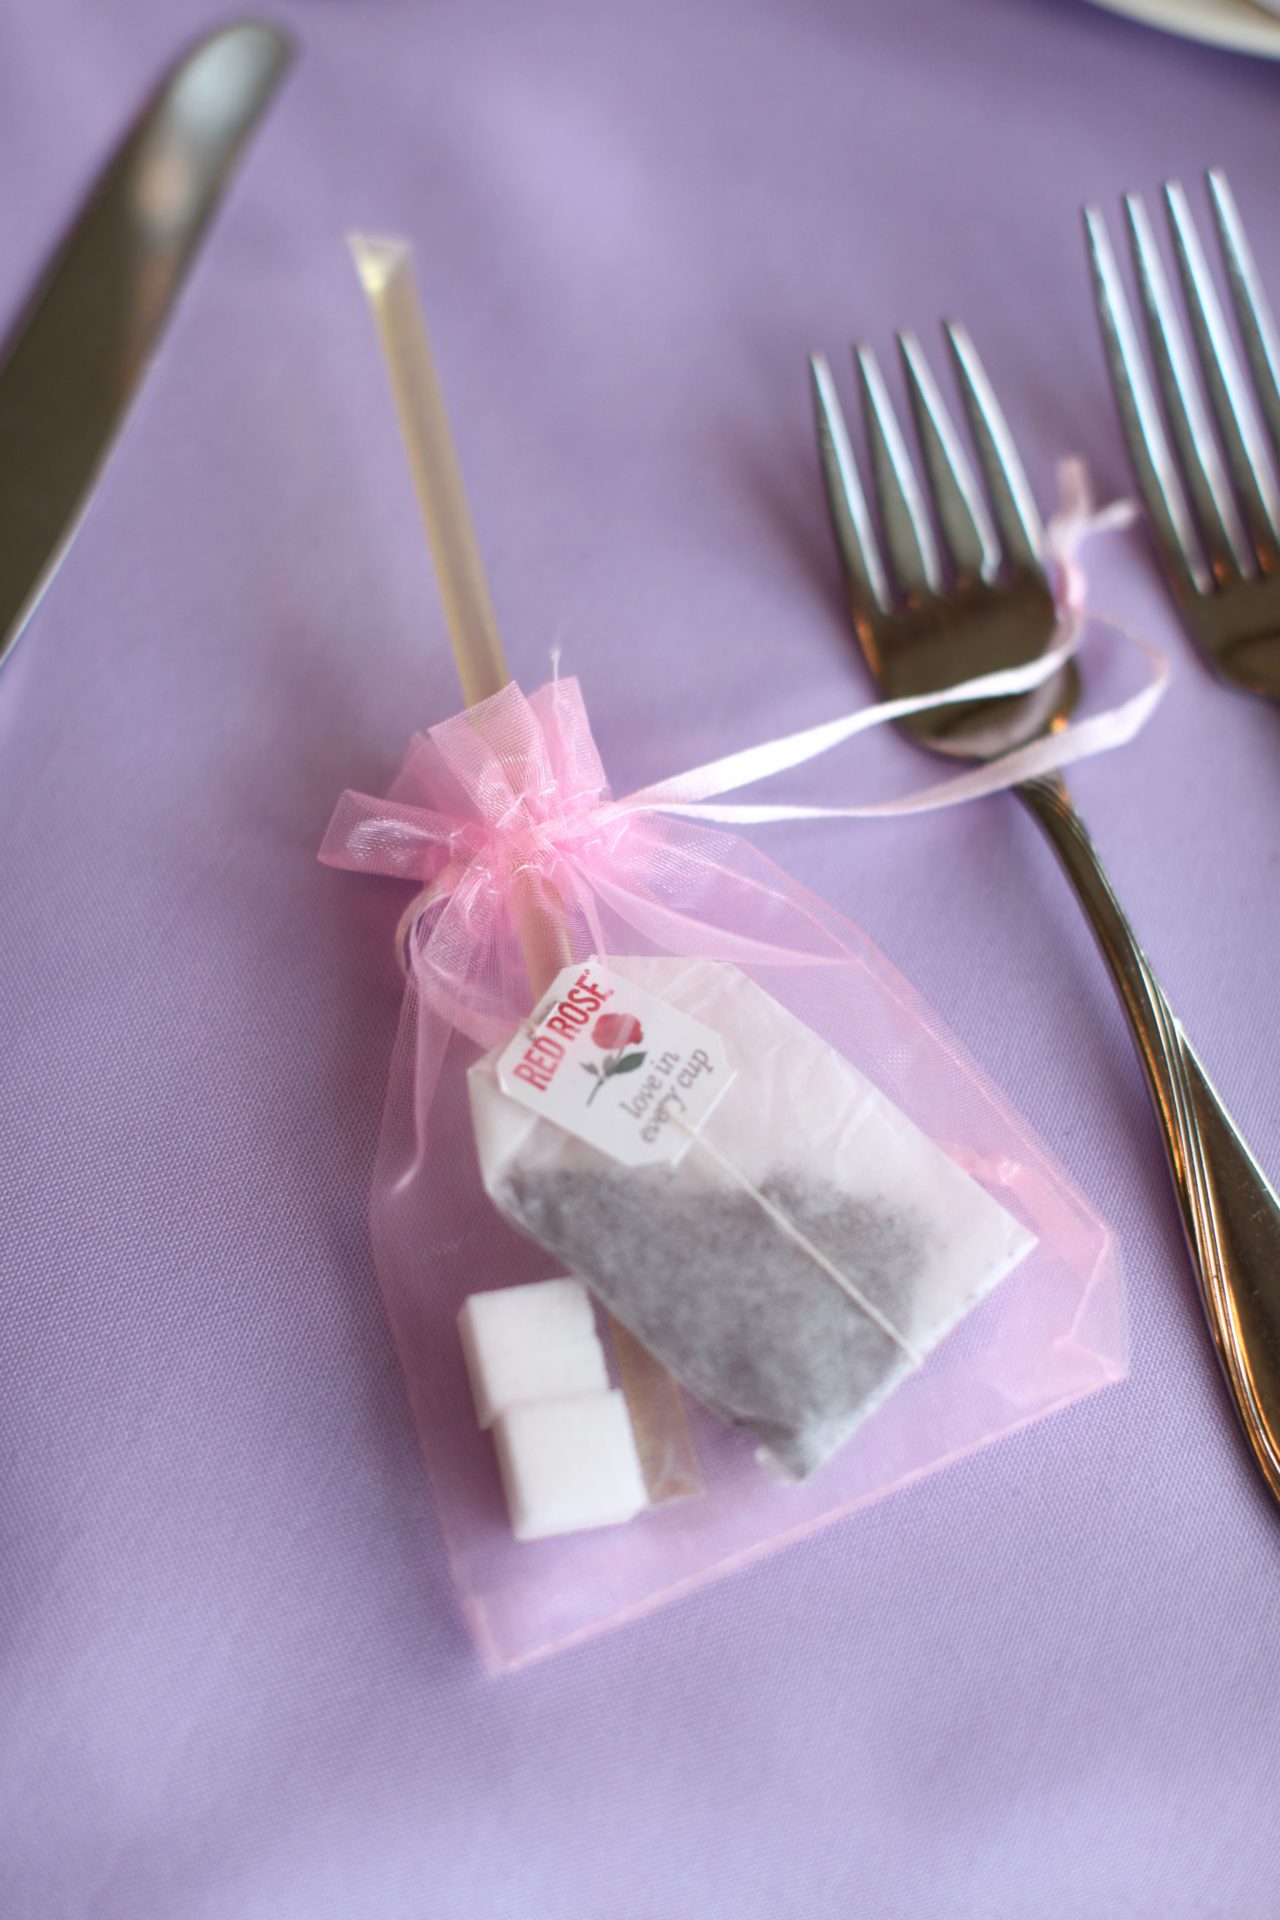 tea party theme wedding wedding favor of tea bag, sugar cubes, and honey stick